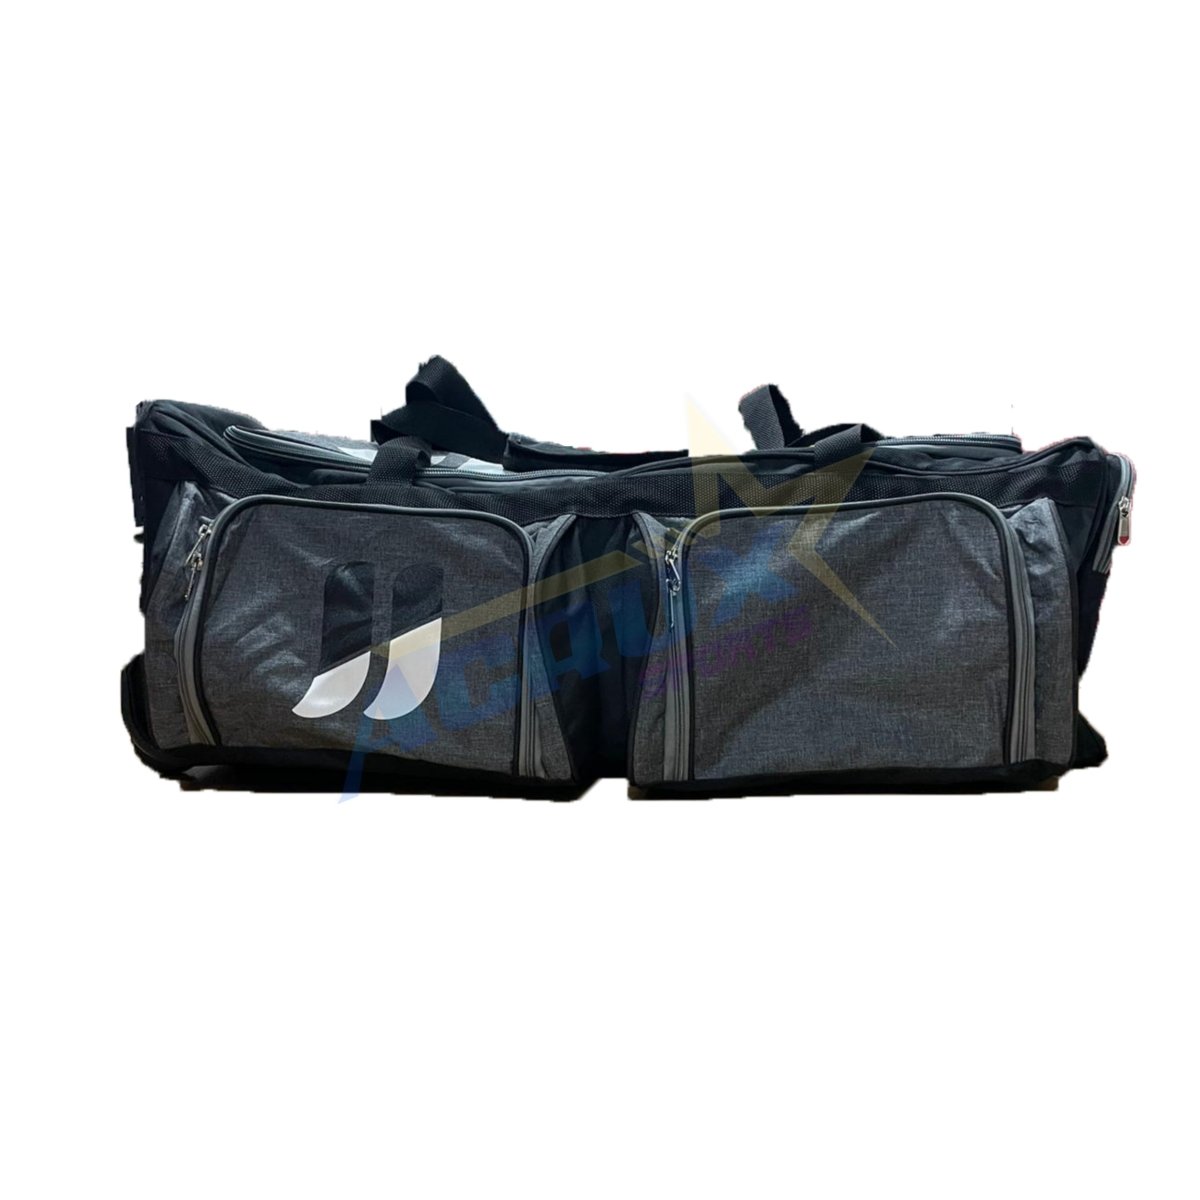 JJ Sports Celestial Pro 3.0 Cricket Kit Bag Wheelie